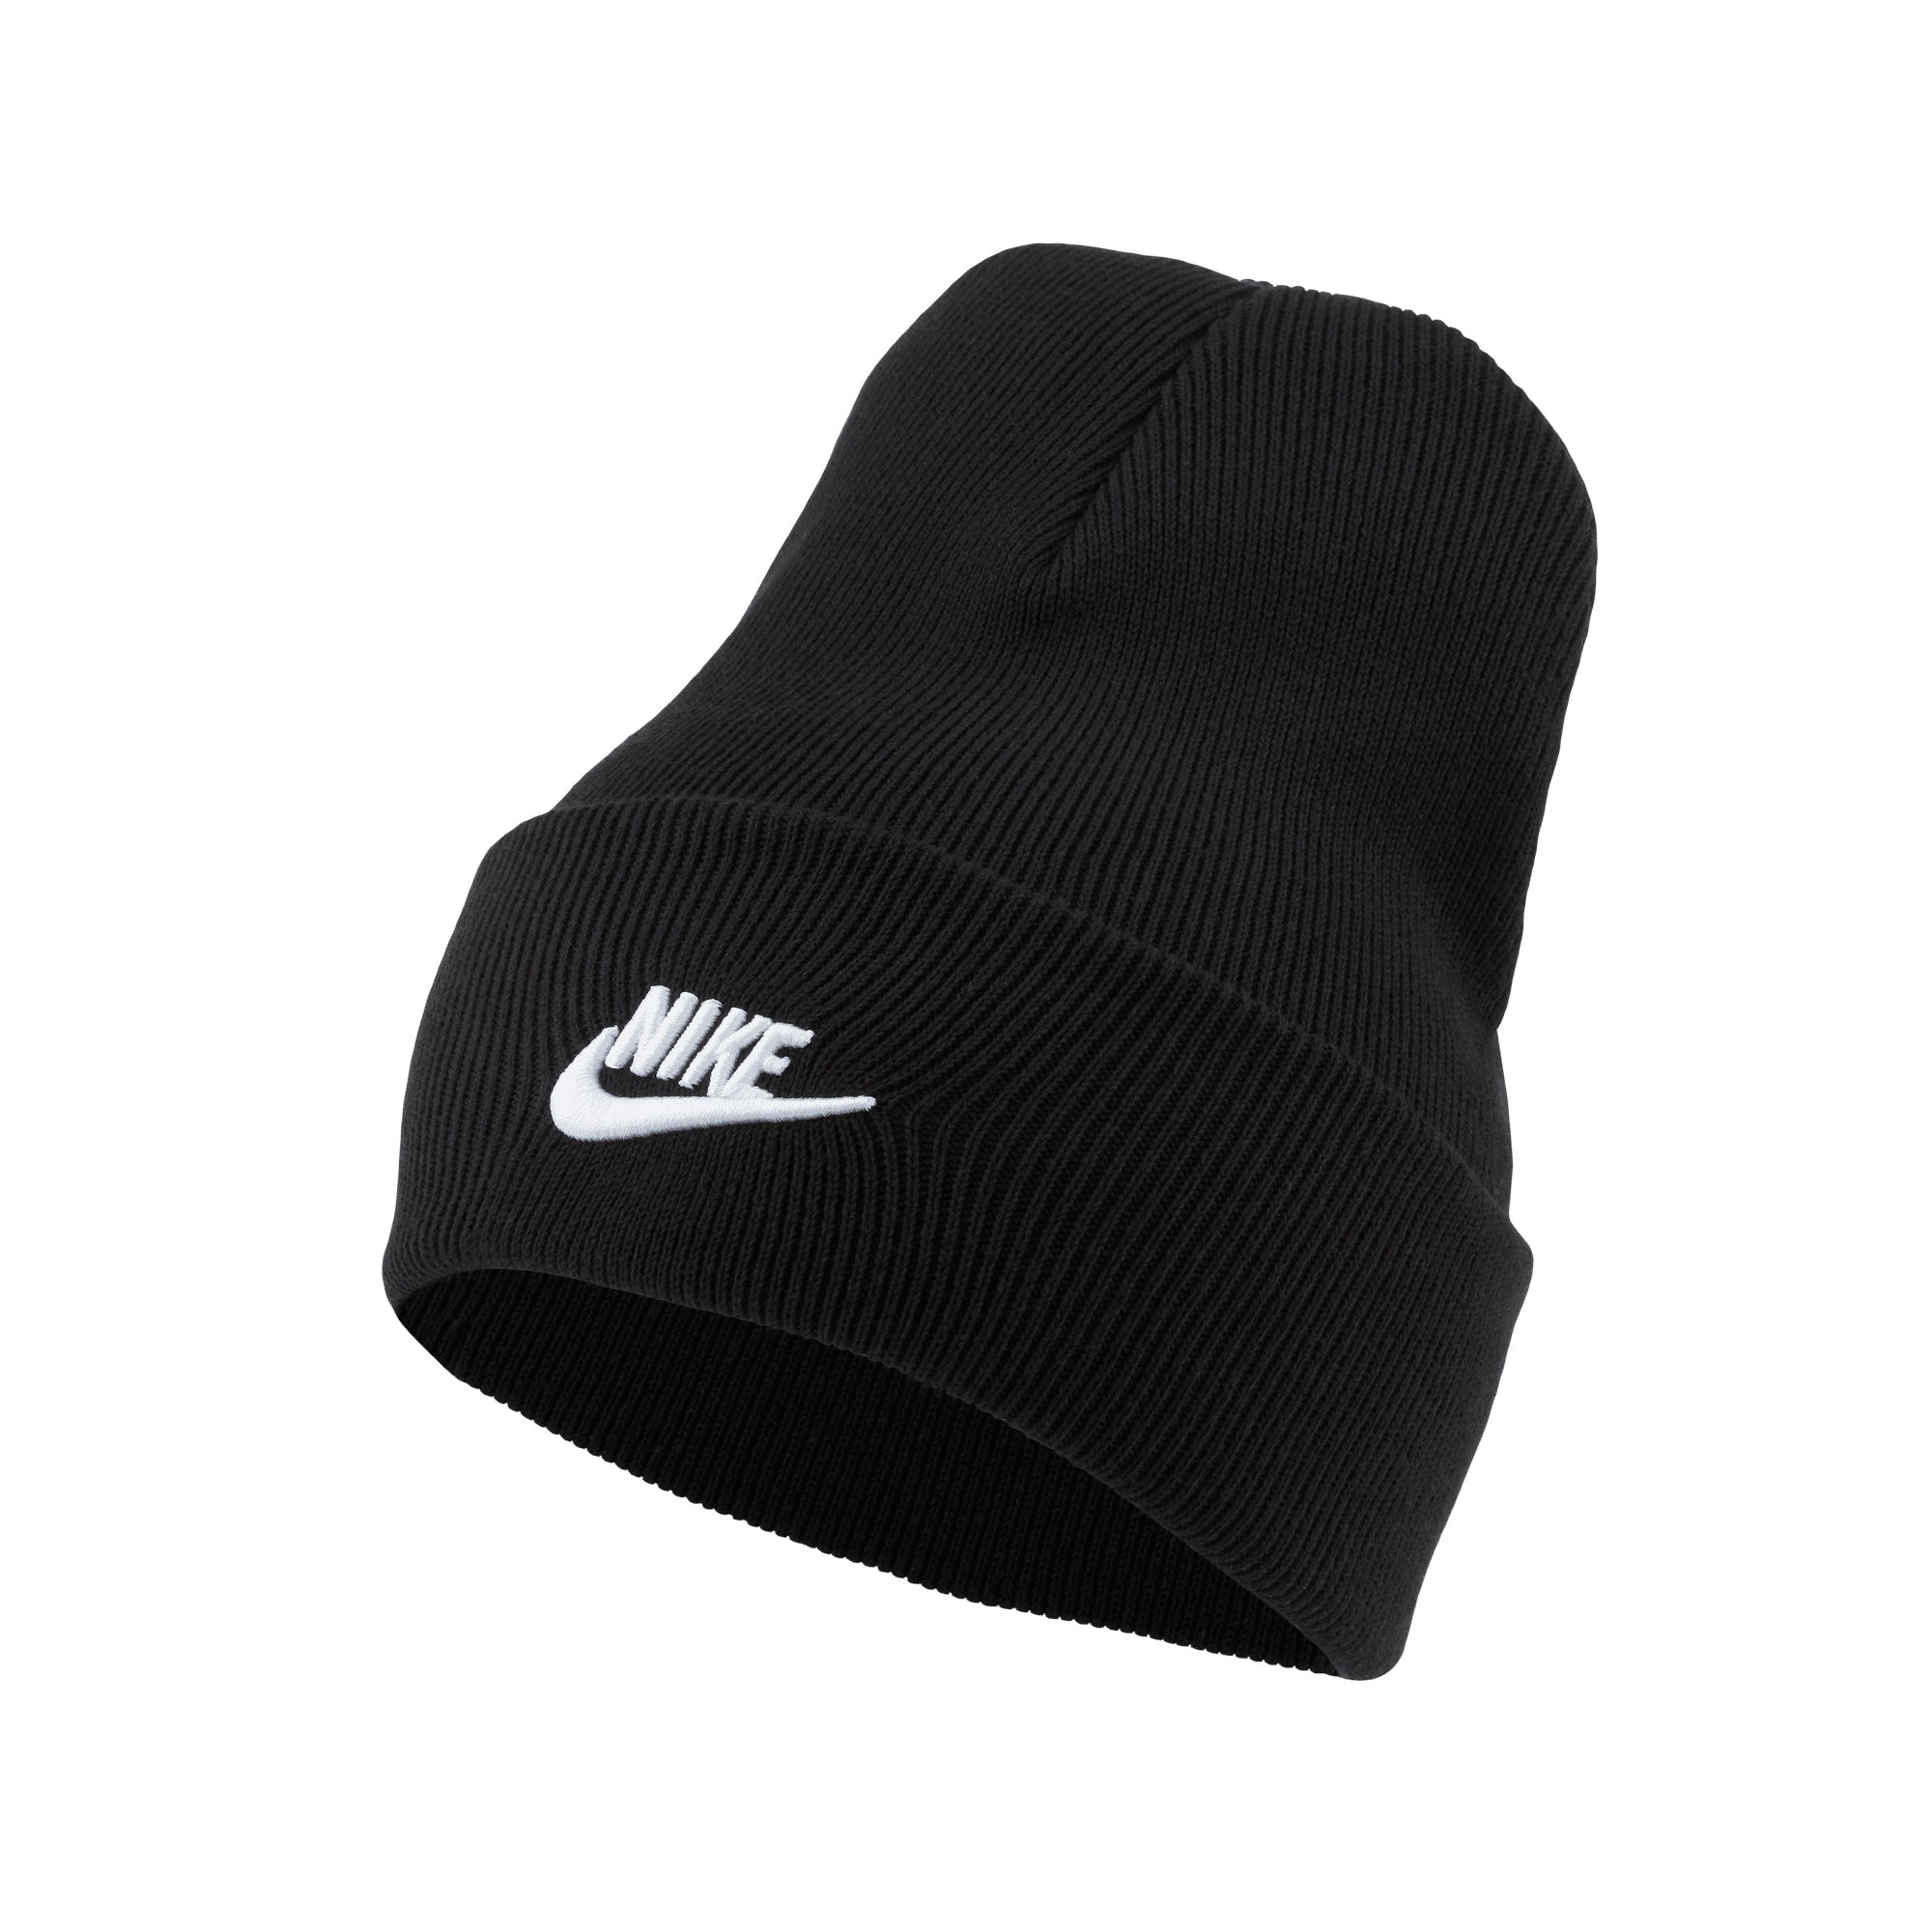 Nike Utility Cuff Beanie - Black/White